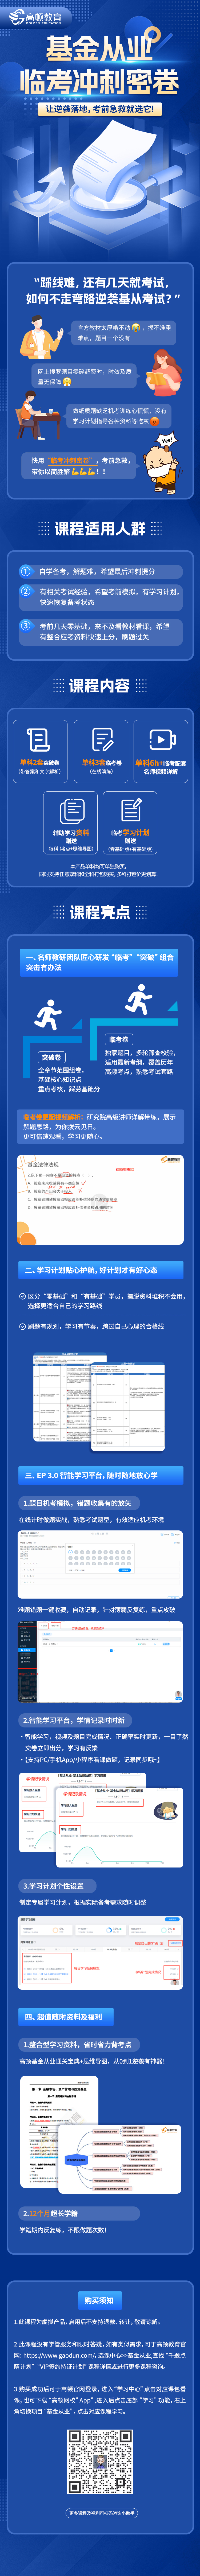 https://simg01.gaodunwangxiao.com/uploadfiles/product-center/202310/31/aa491_20231031130926.jpg